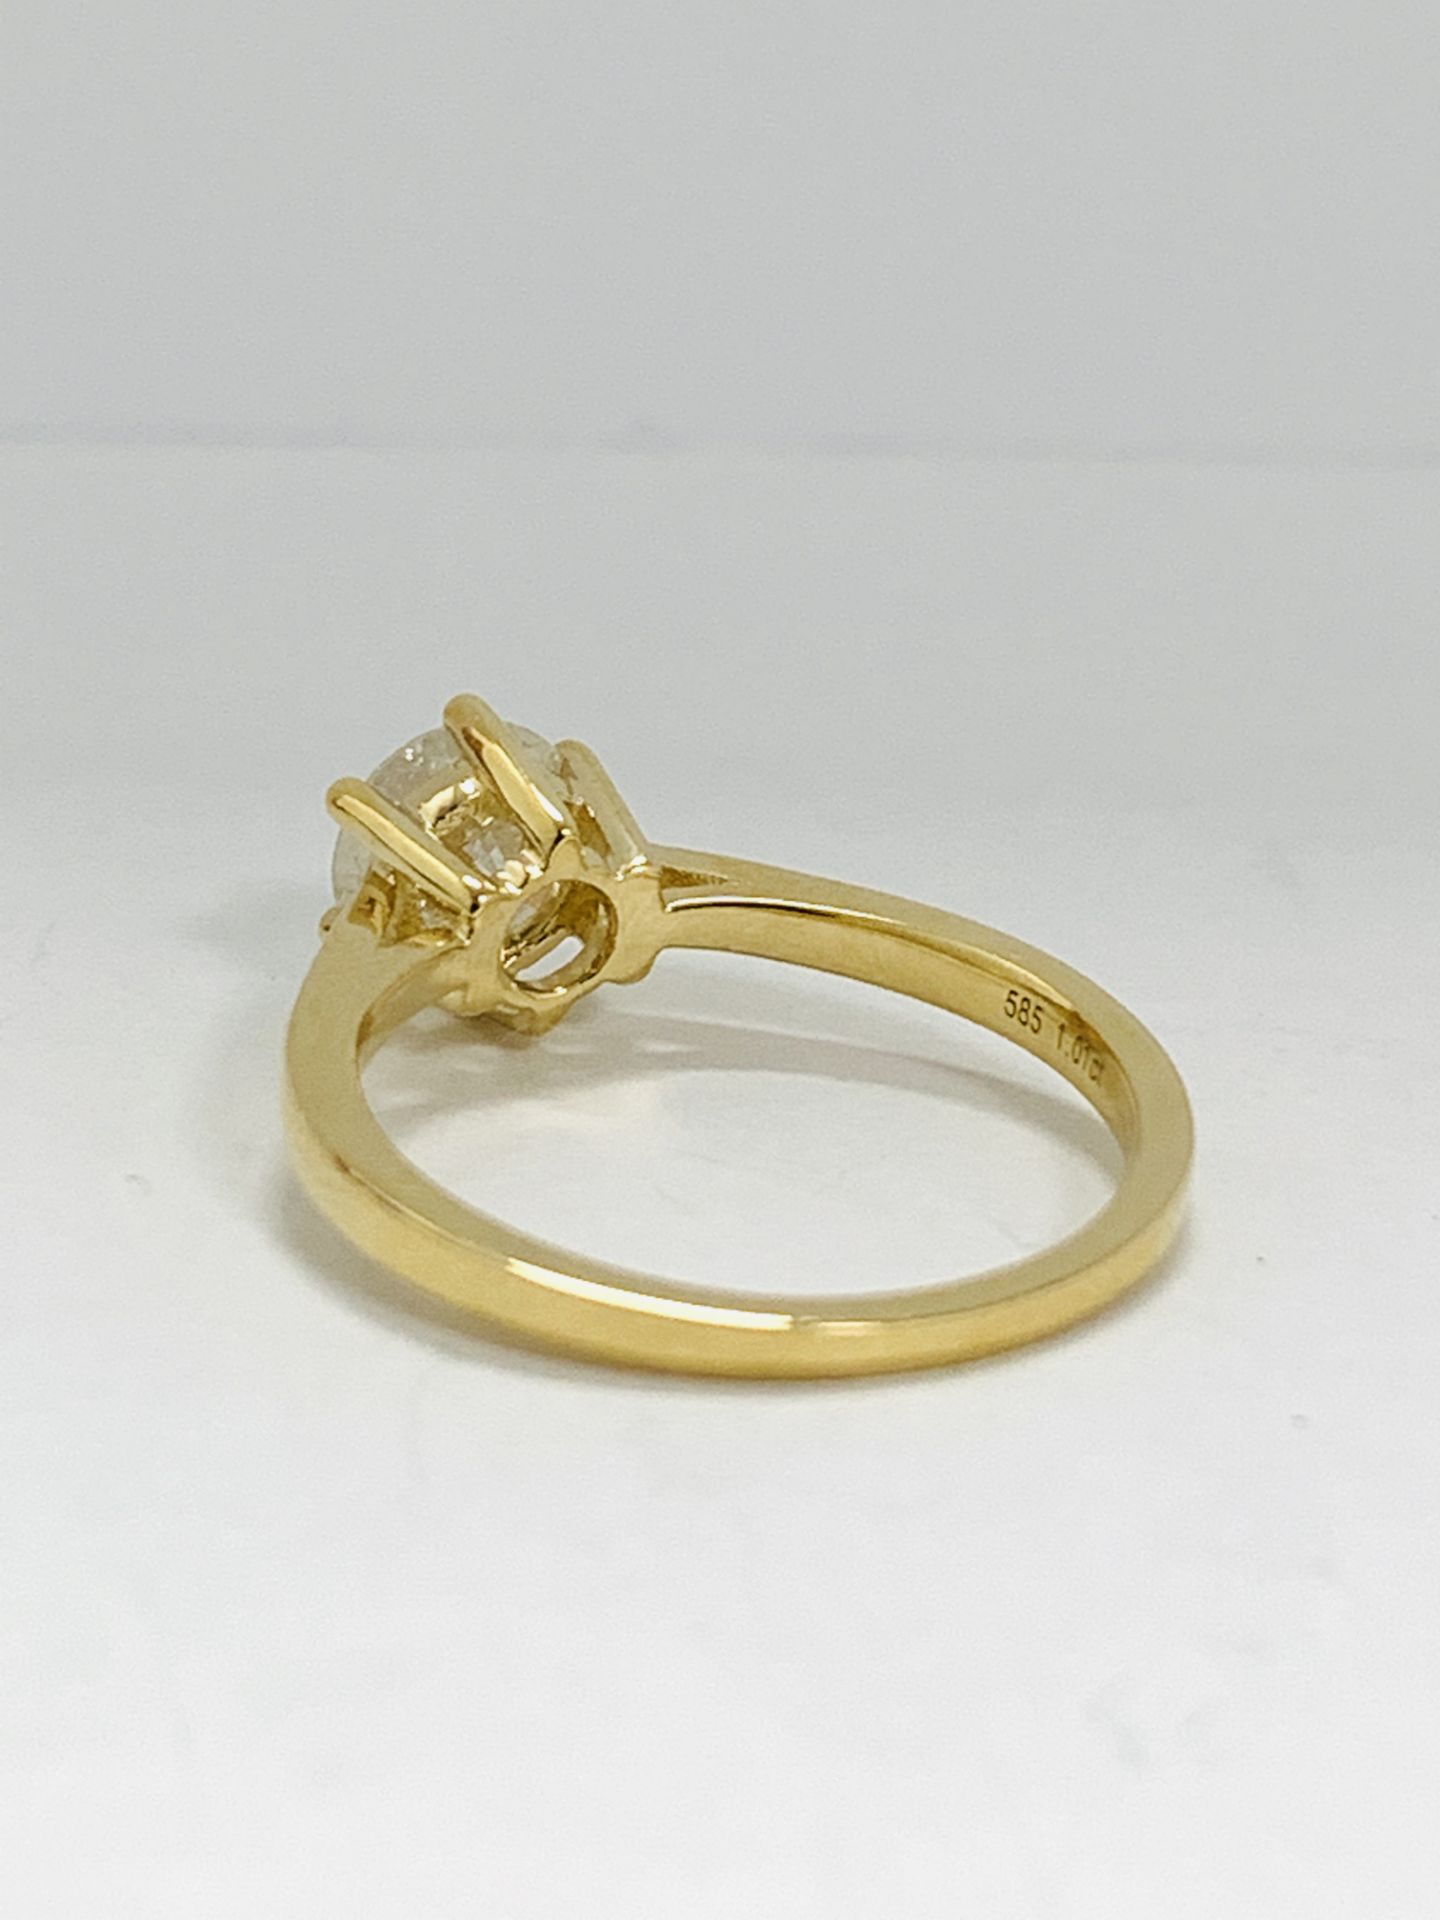 14K Yellow Gold Ring - Image 4 of 10